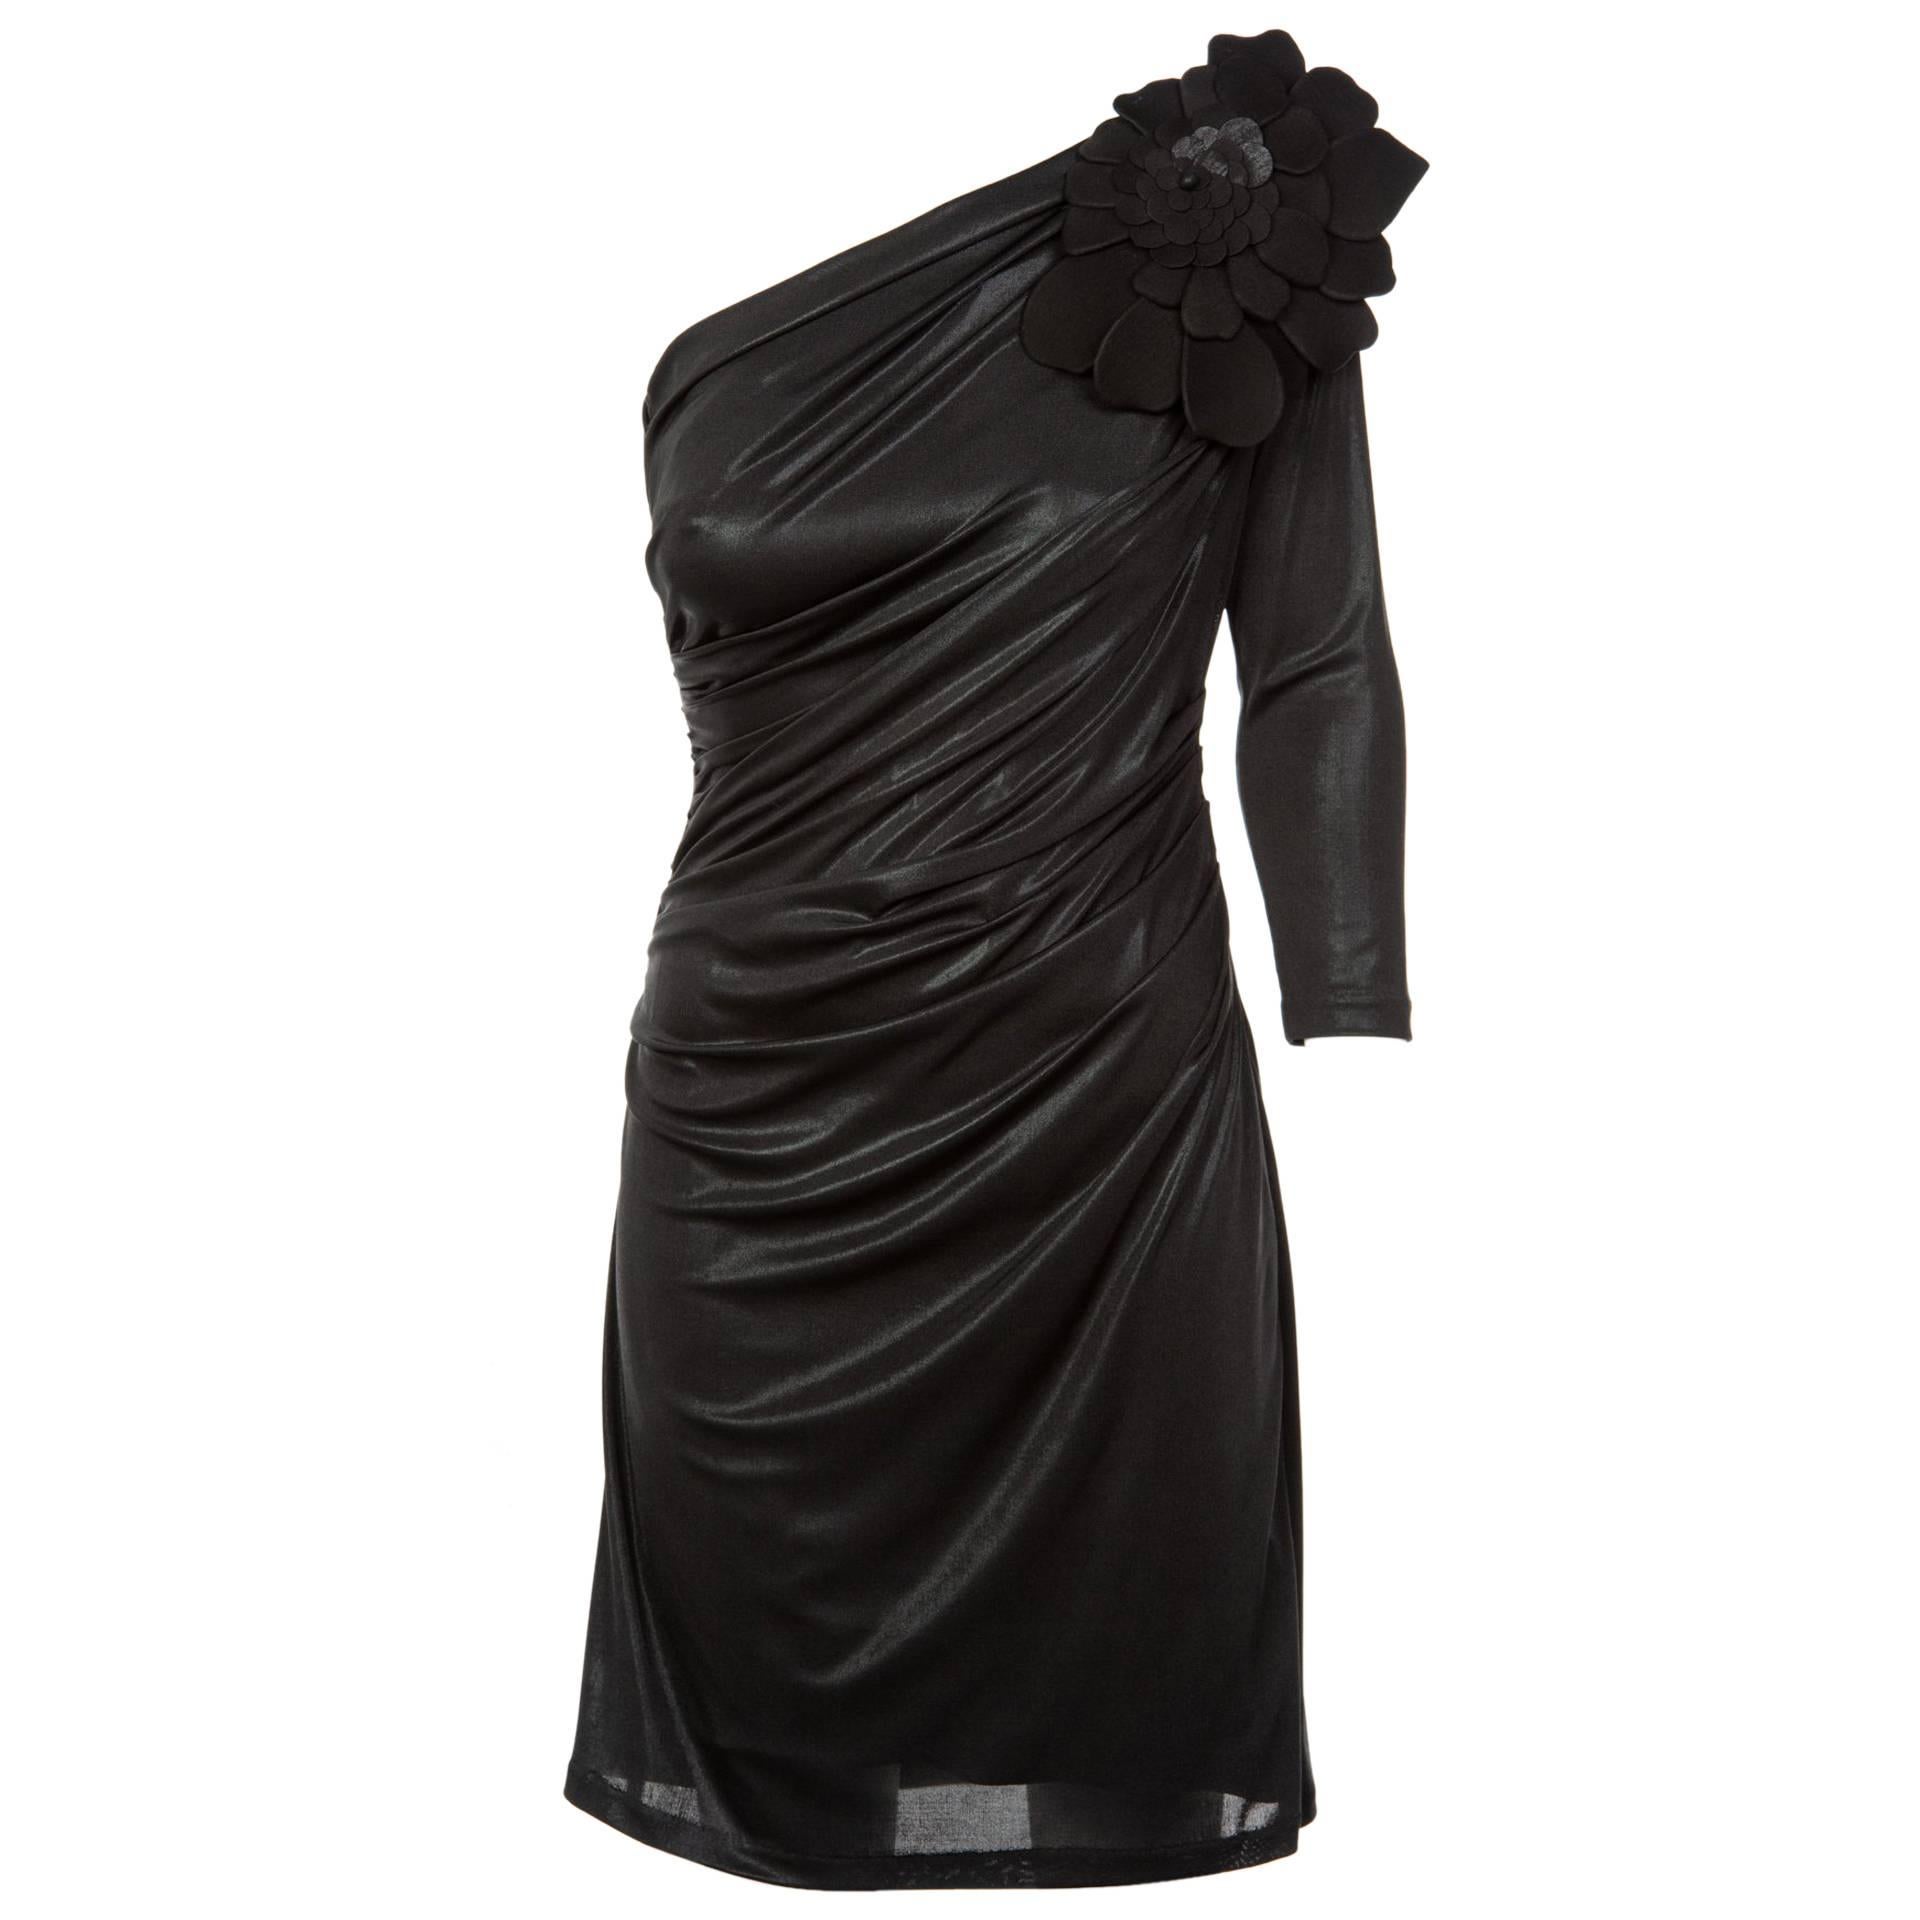 Collette Dinnigan Runway Liquid Jersey Black Dress, A / W 2008